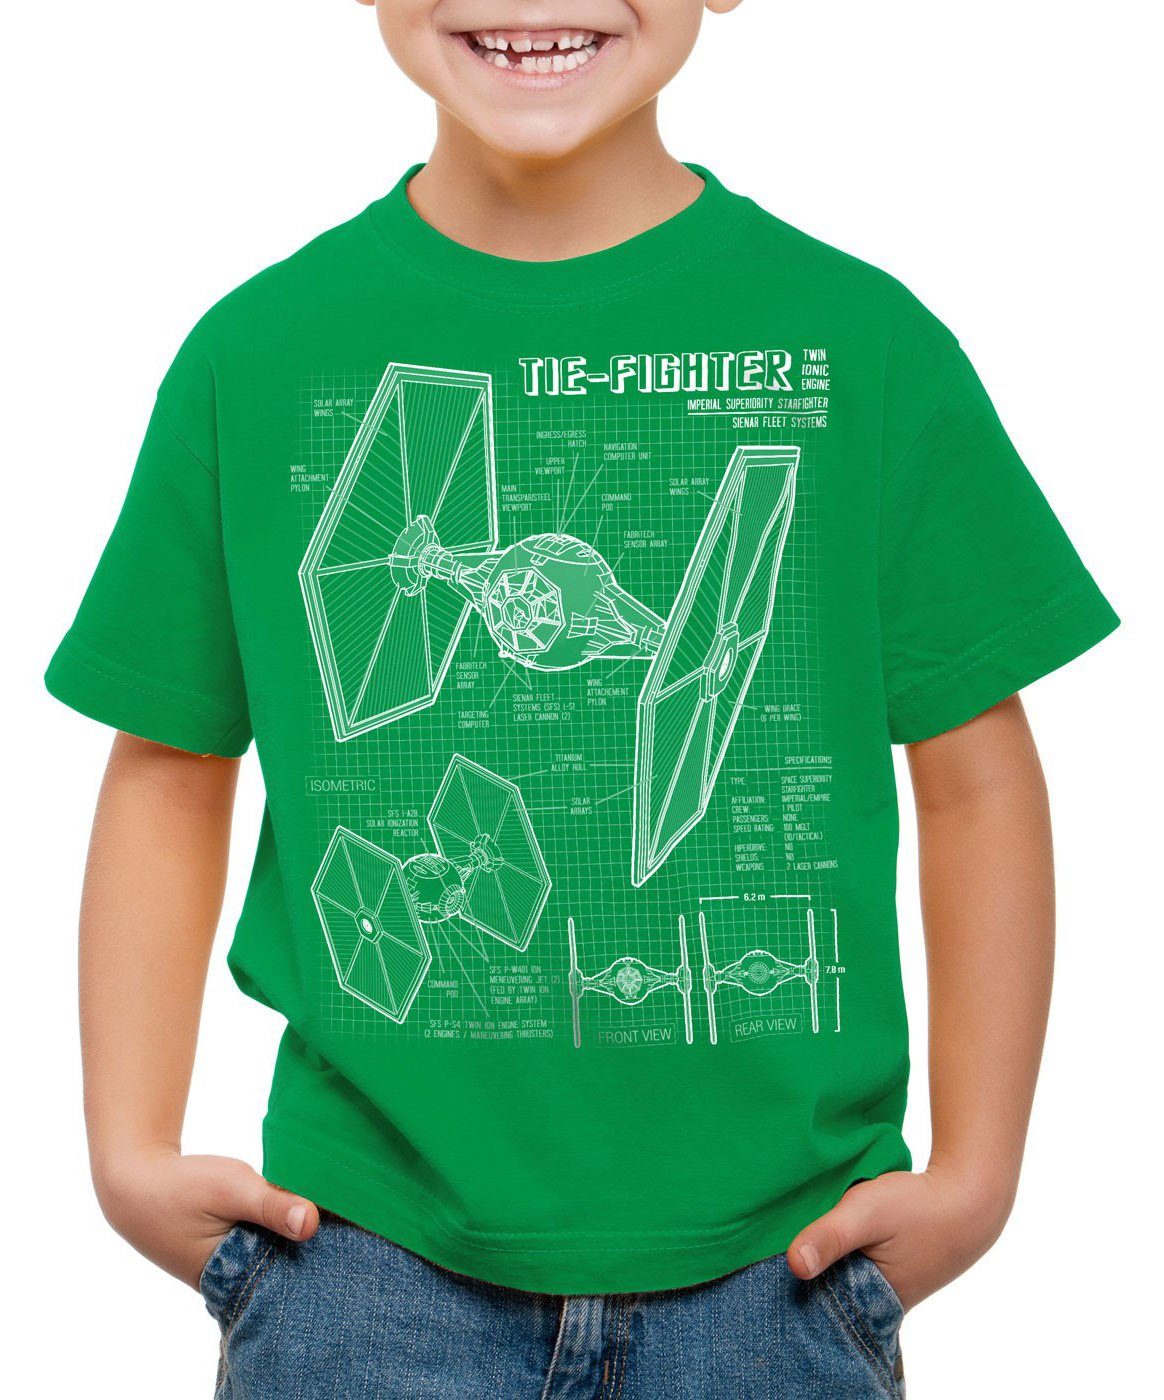 style3 Print-Shirt Kinder T-Shirt T-Shirt grün blaupause fighter Jäger TIE